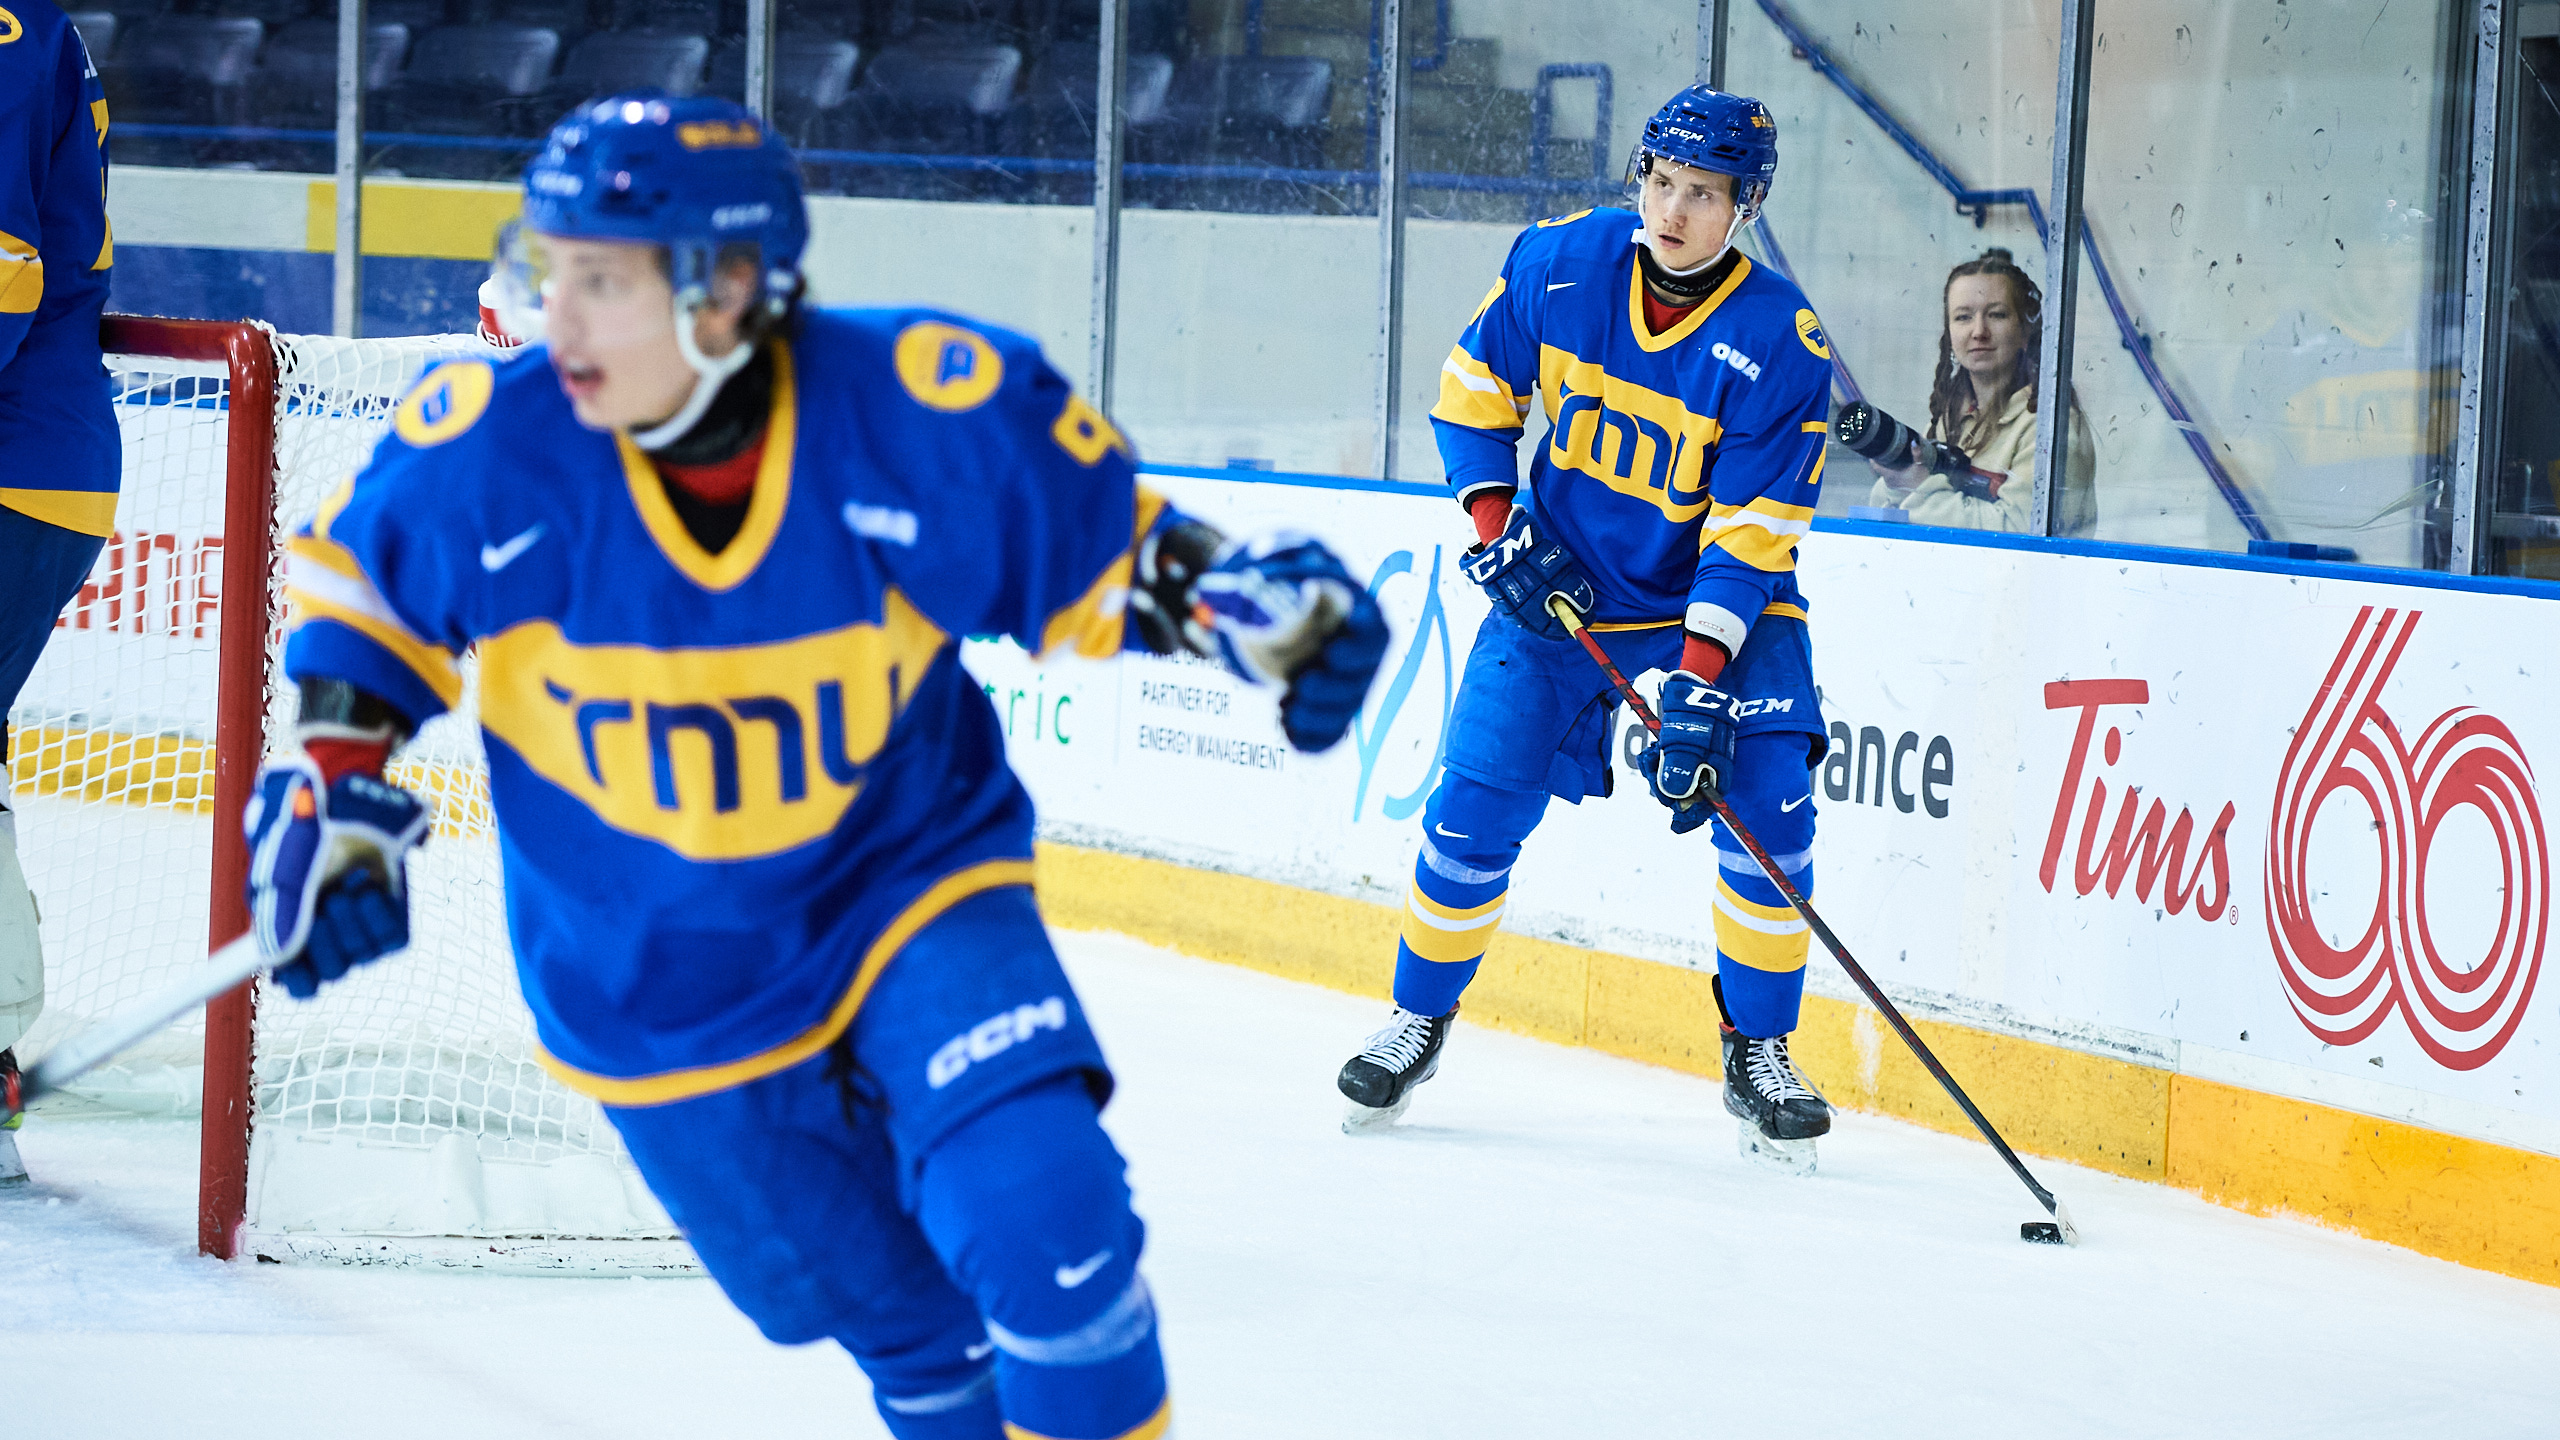 TMU men's hockey player Artem Duda skates with the puck behind the goal as Daniil Grigorev skates forward